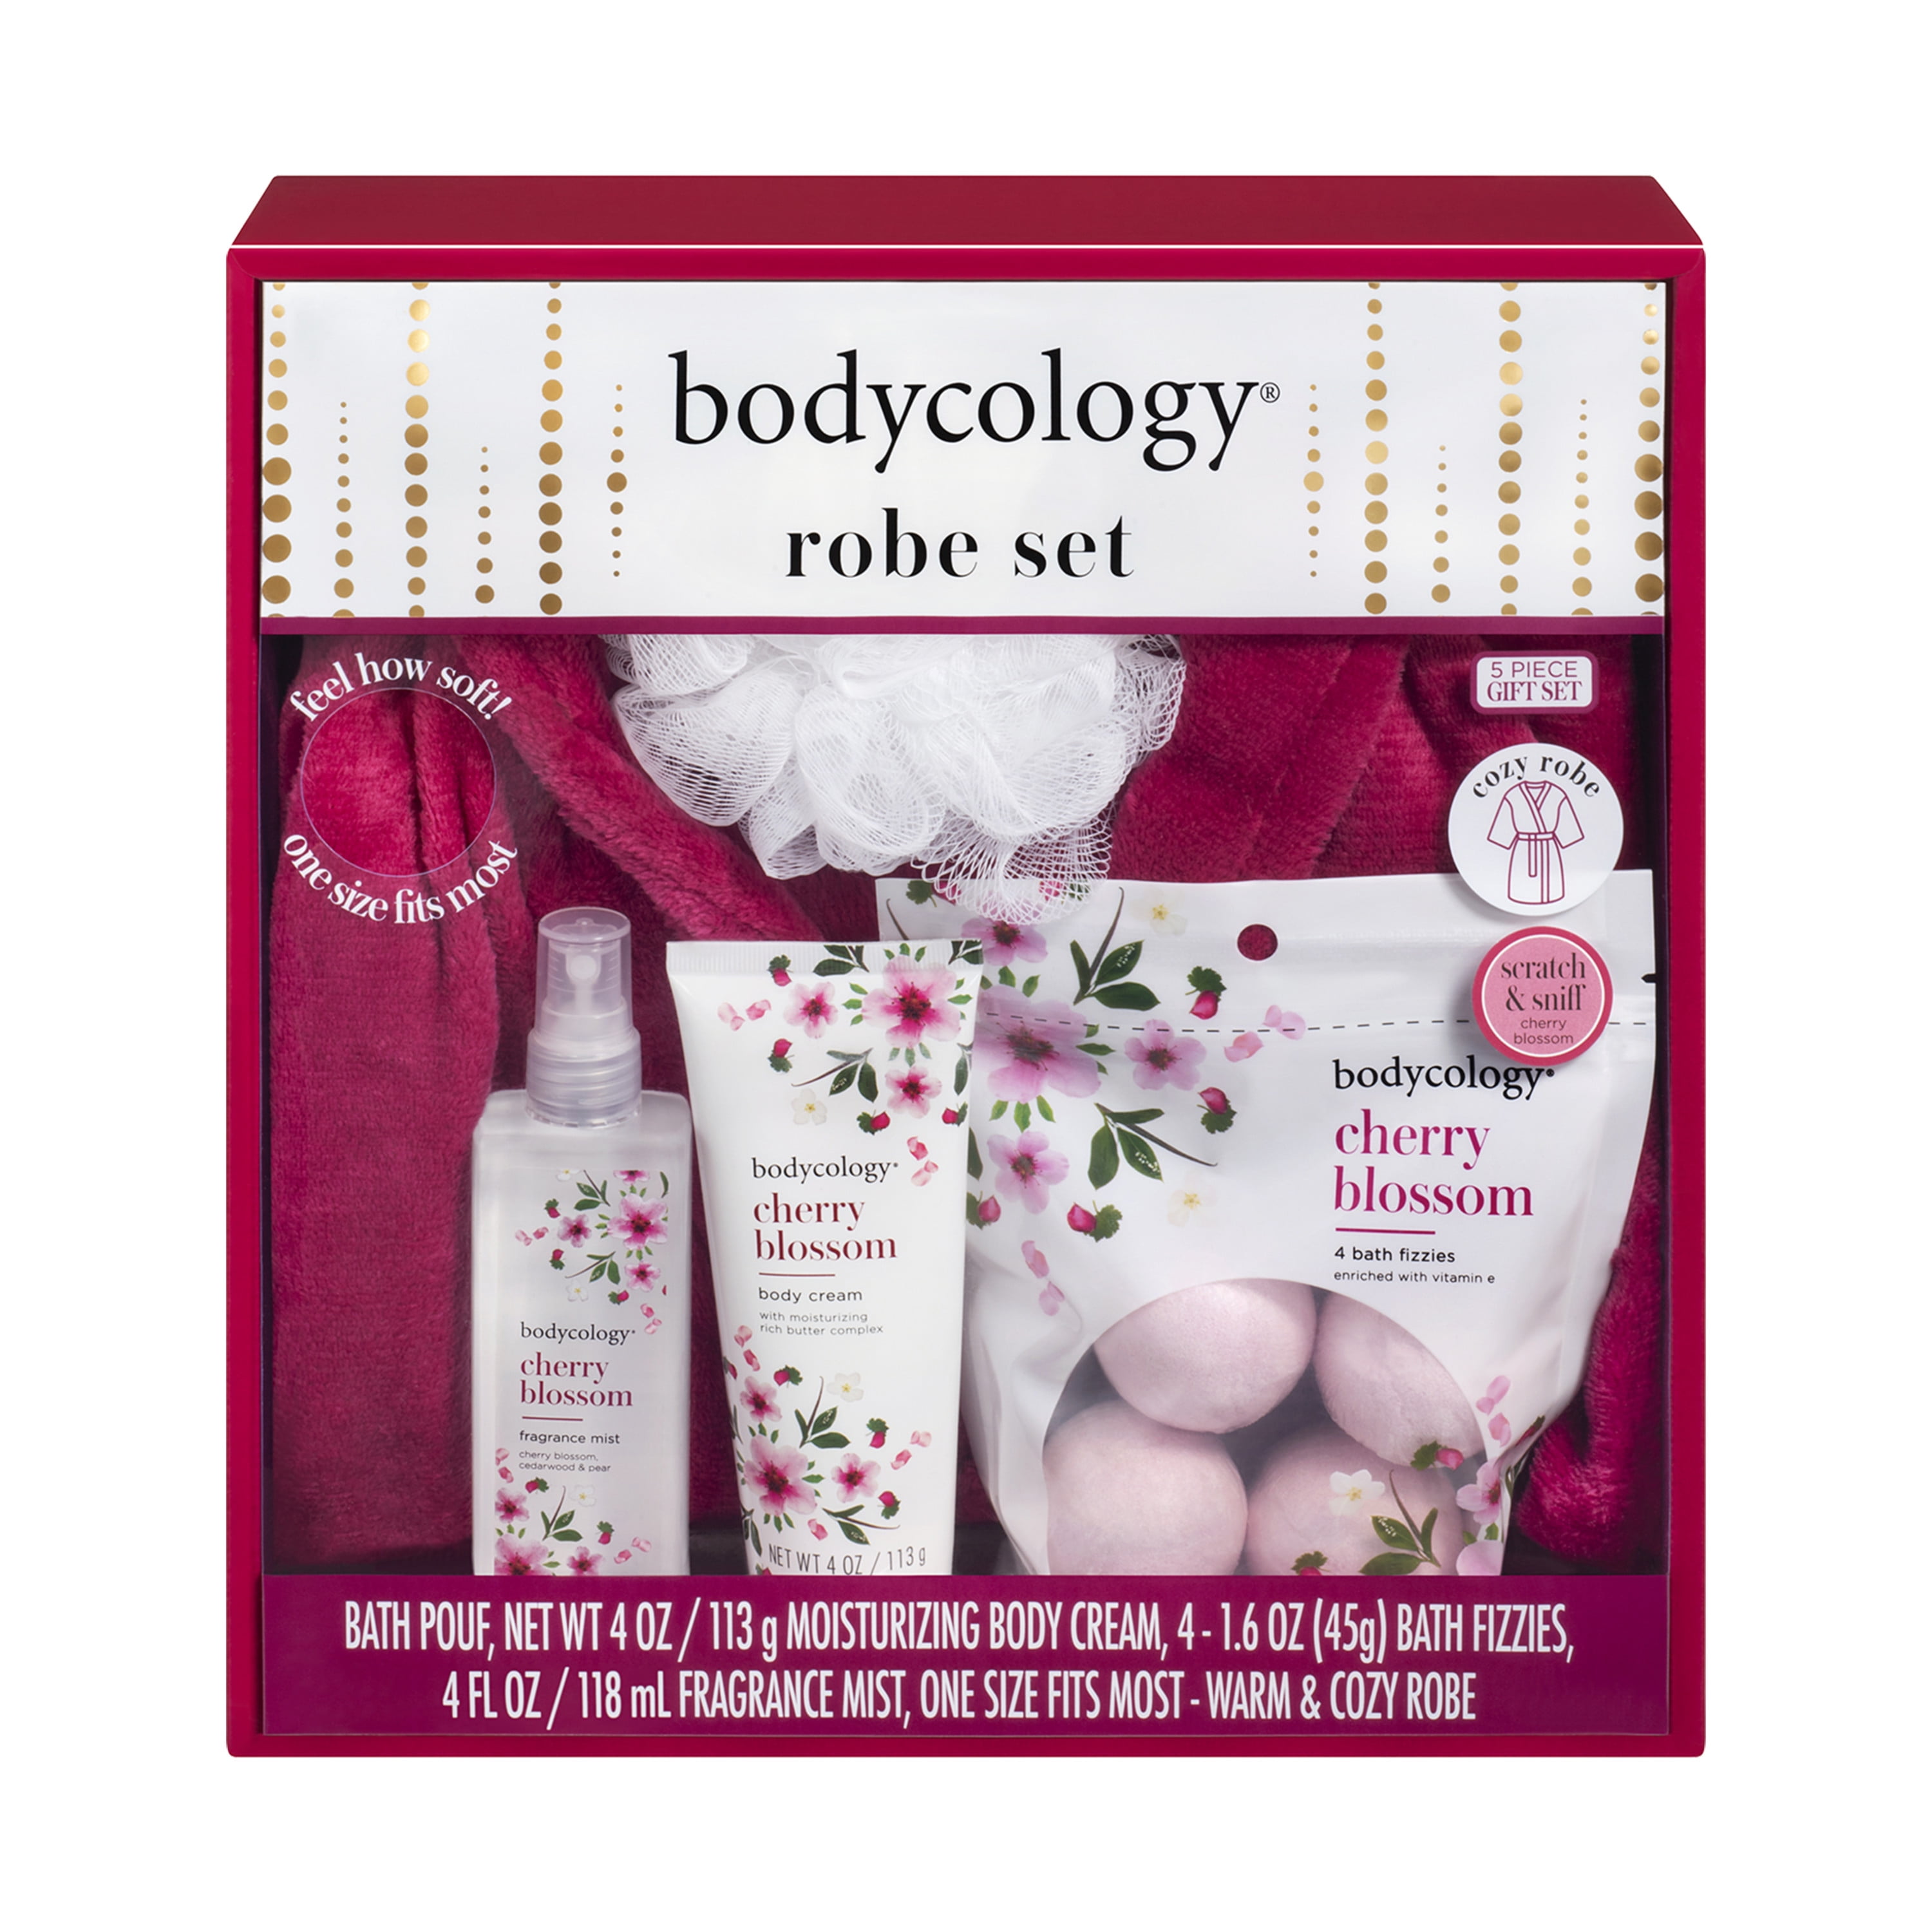 Bodycology Cherry Blossom Bath & Body Set with Robe, 5 Piece